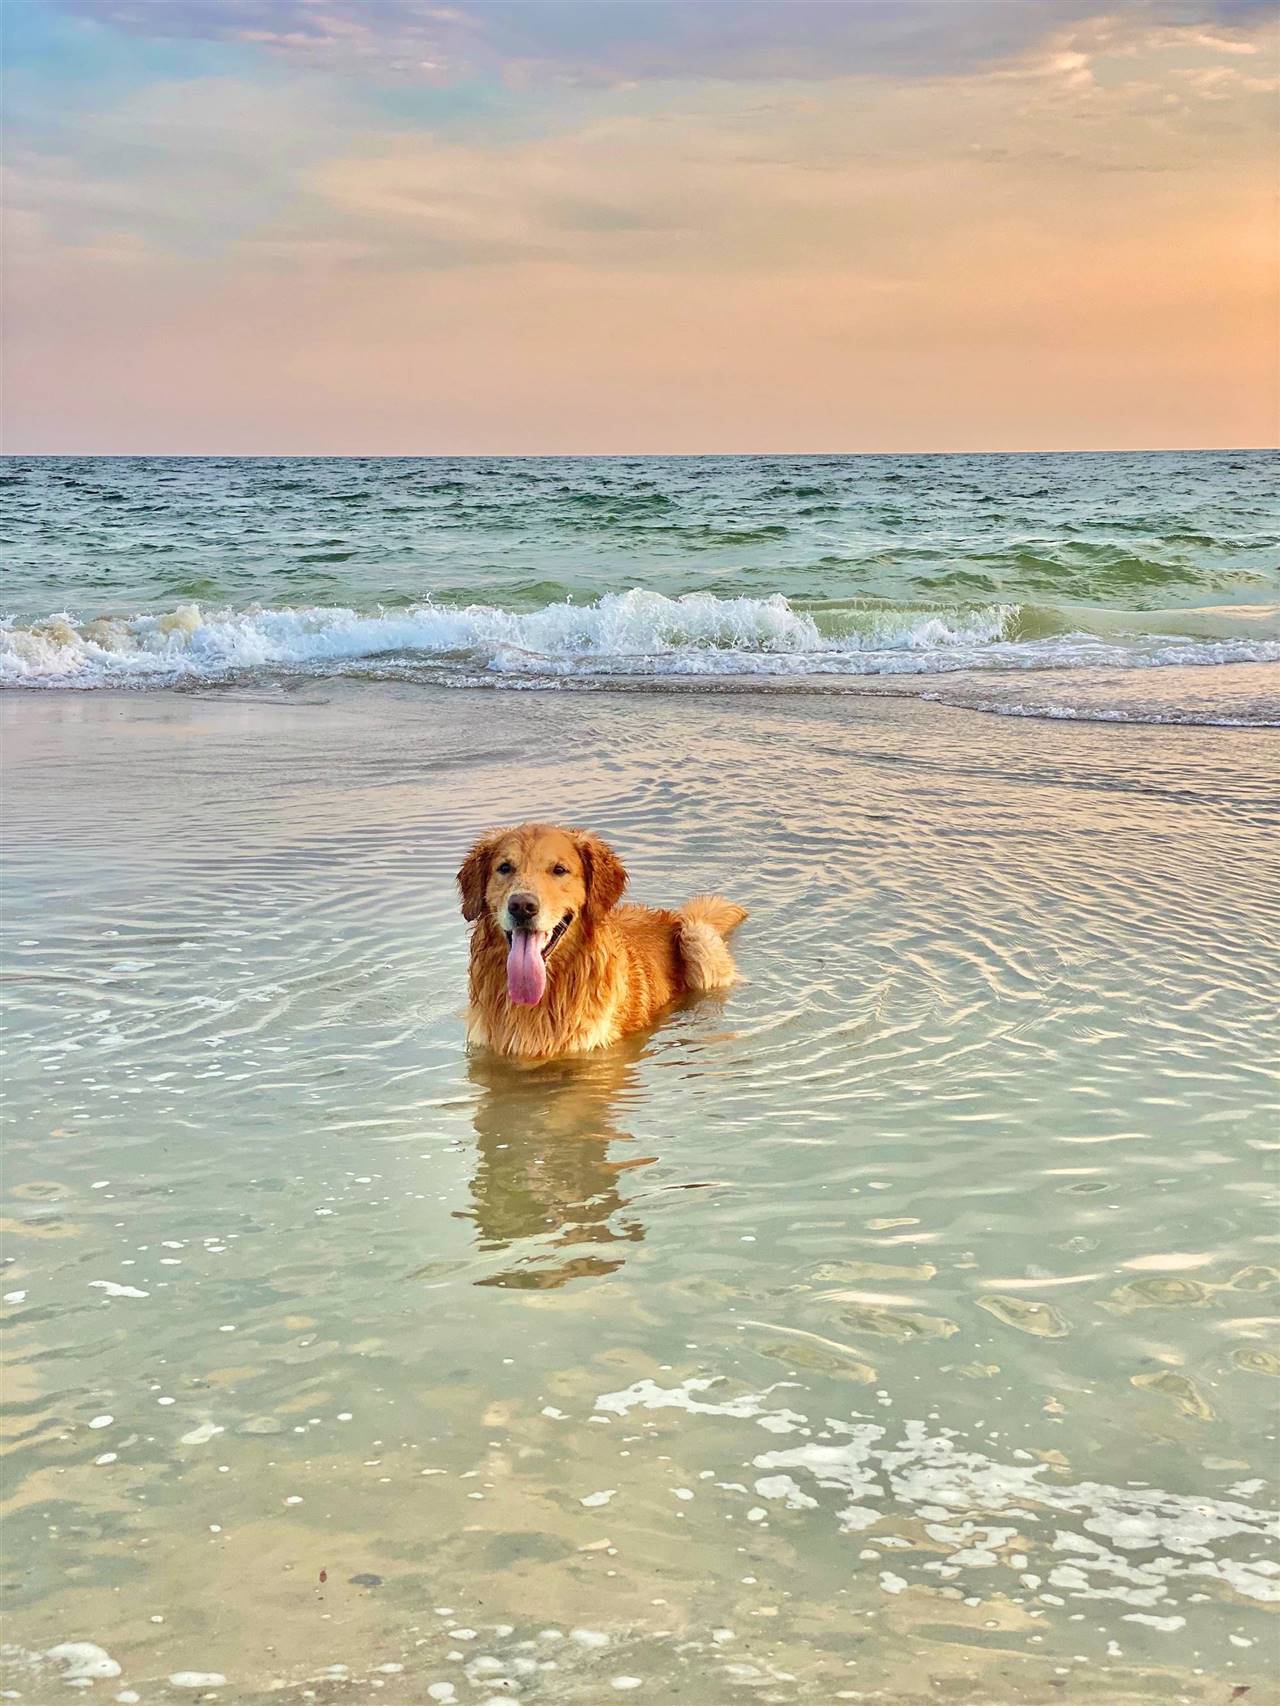 darle agua al perro en horas de calor, hidrata a tu perro, Cómo prevenir un golpe de calor en perros, Consejos para mantener a tu mascota segura en días calurosos